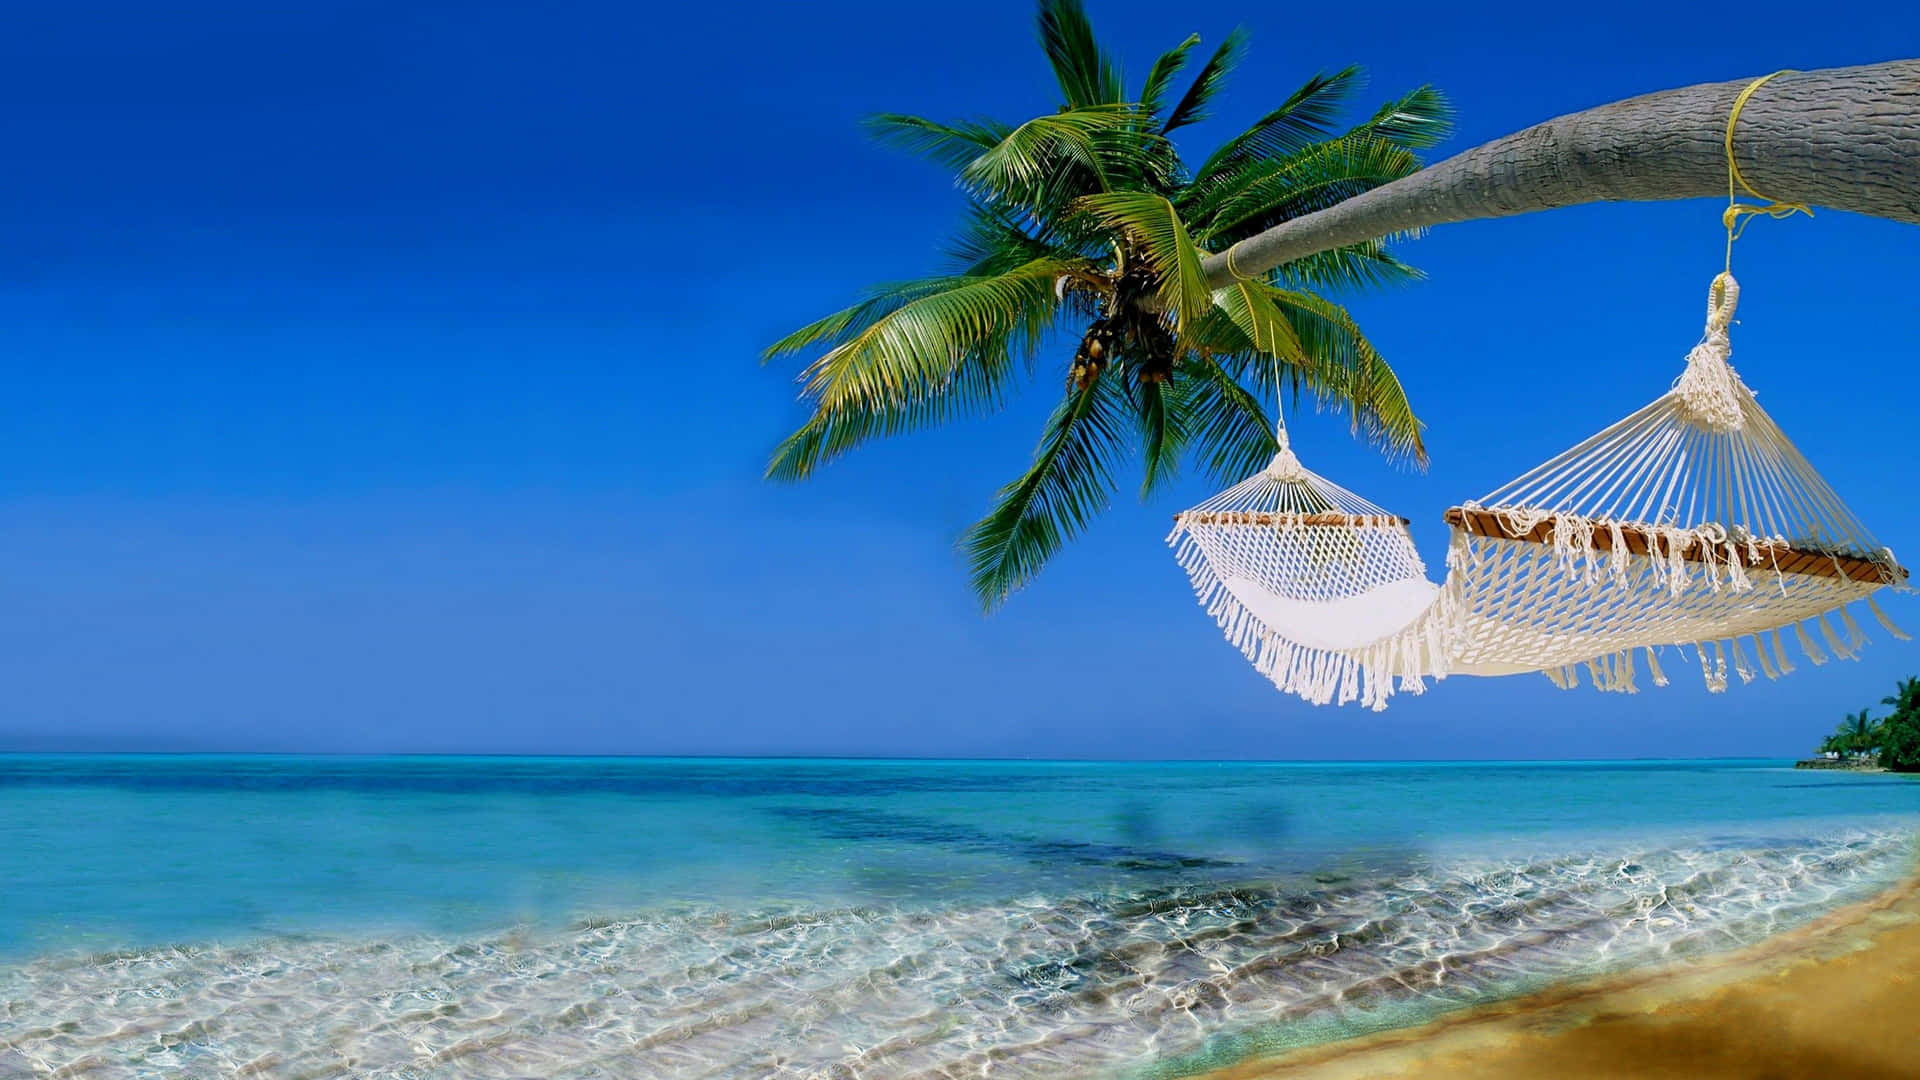 Enjoy a tranquil day at Hawaii beach Wallpaper